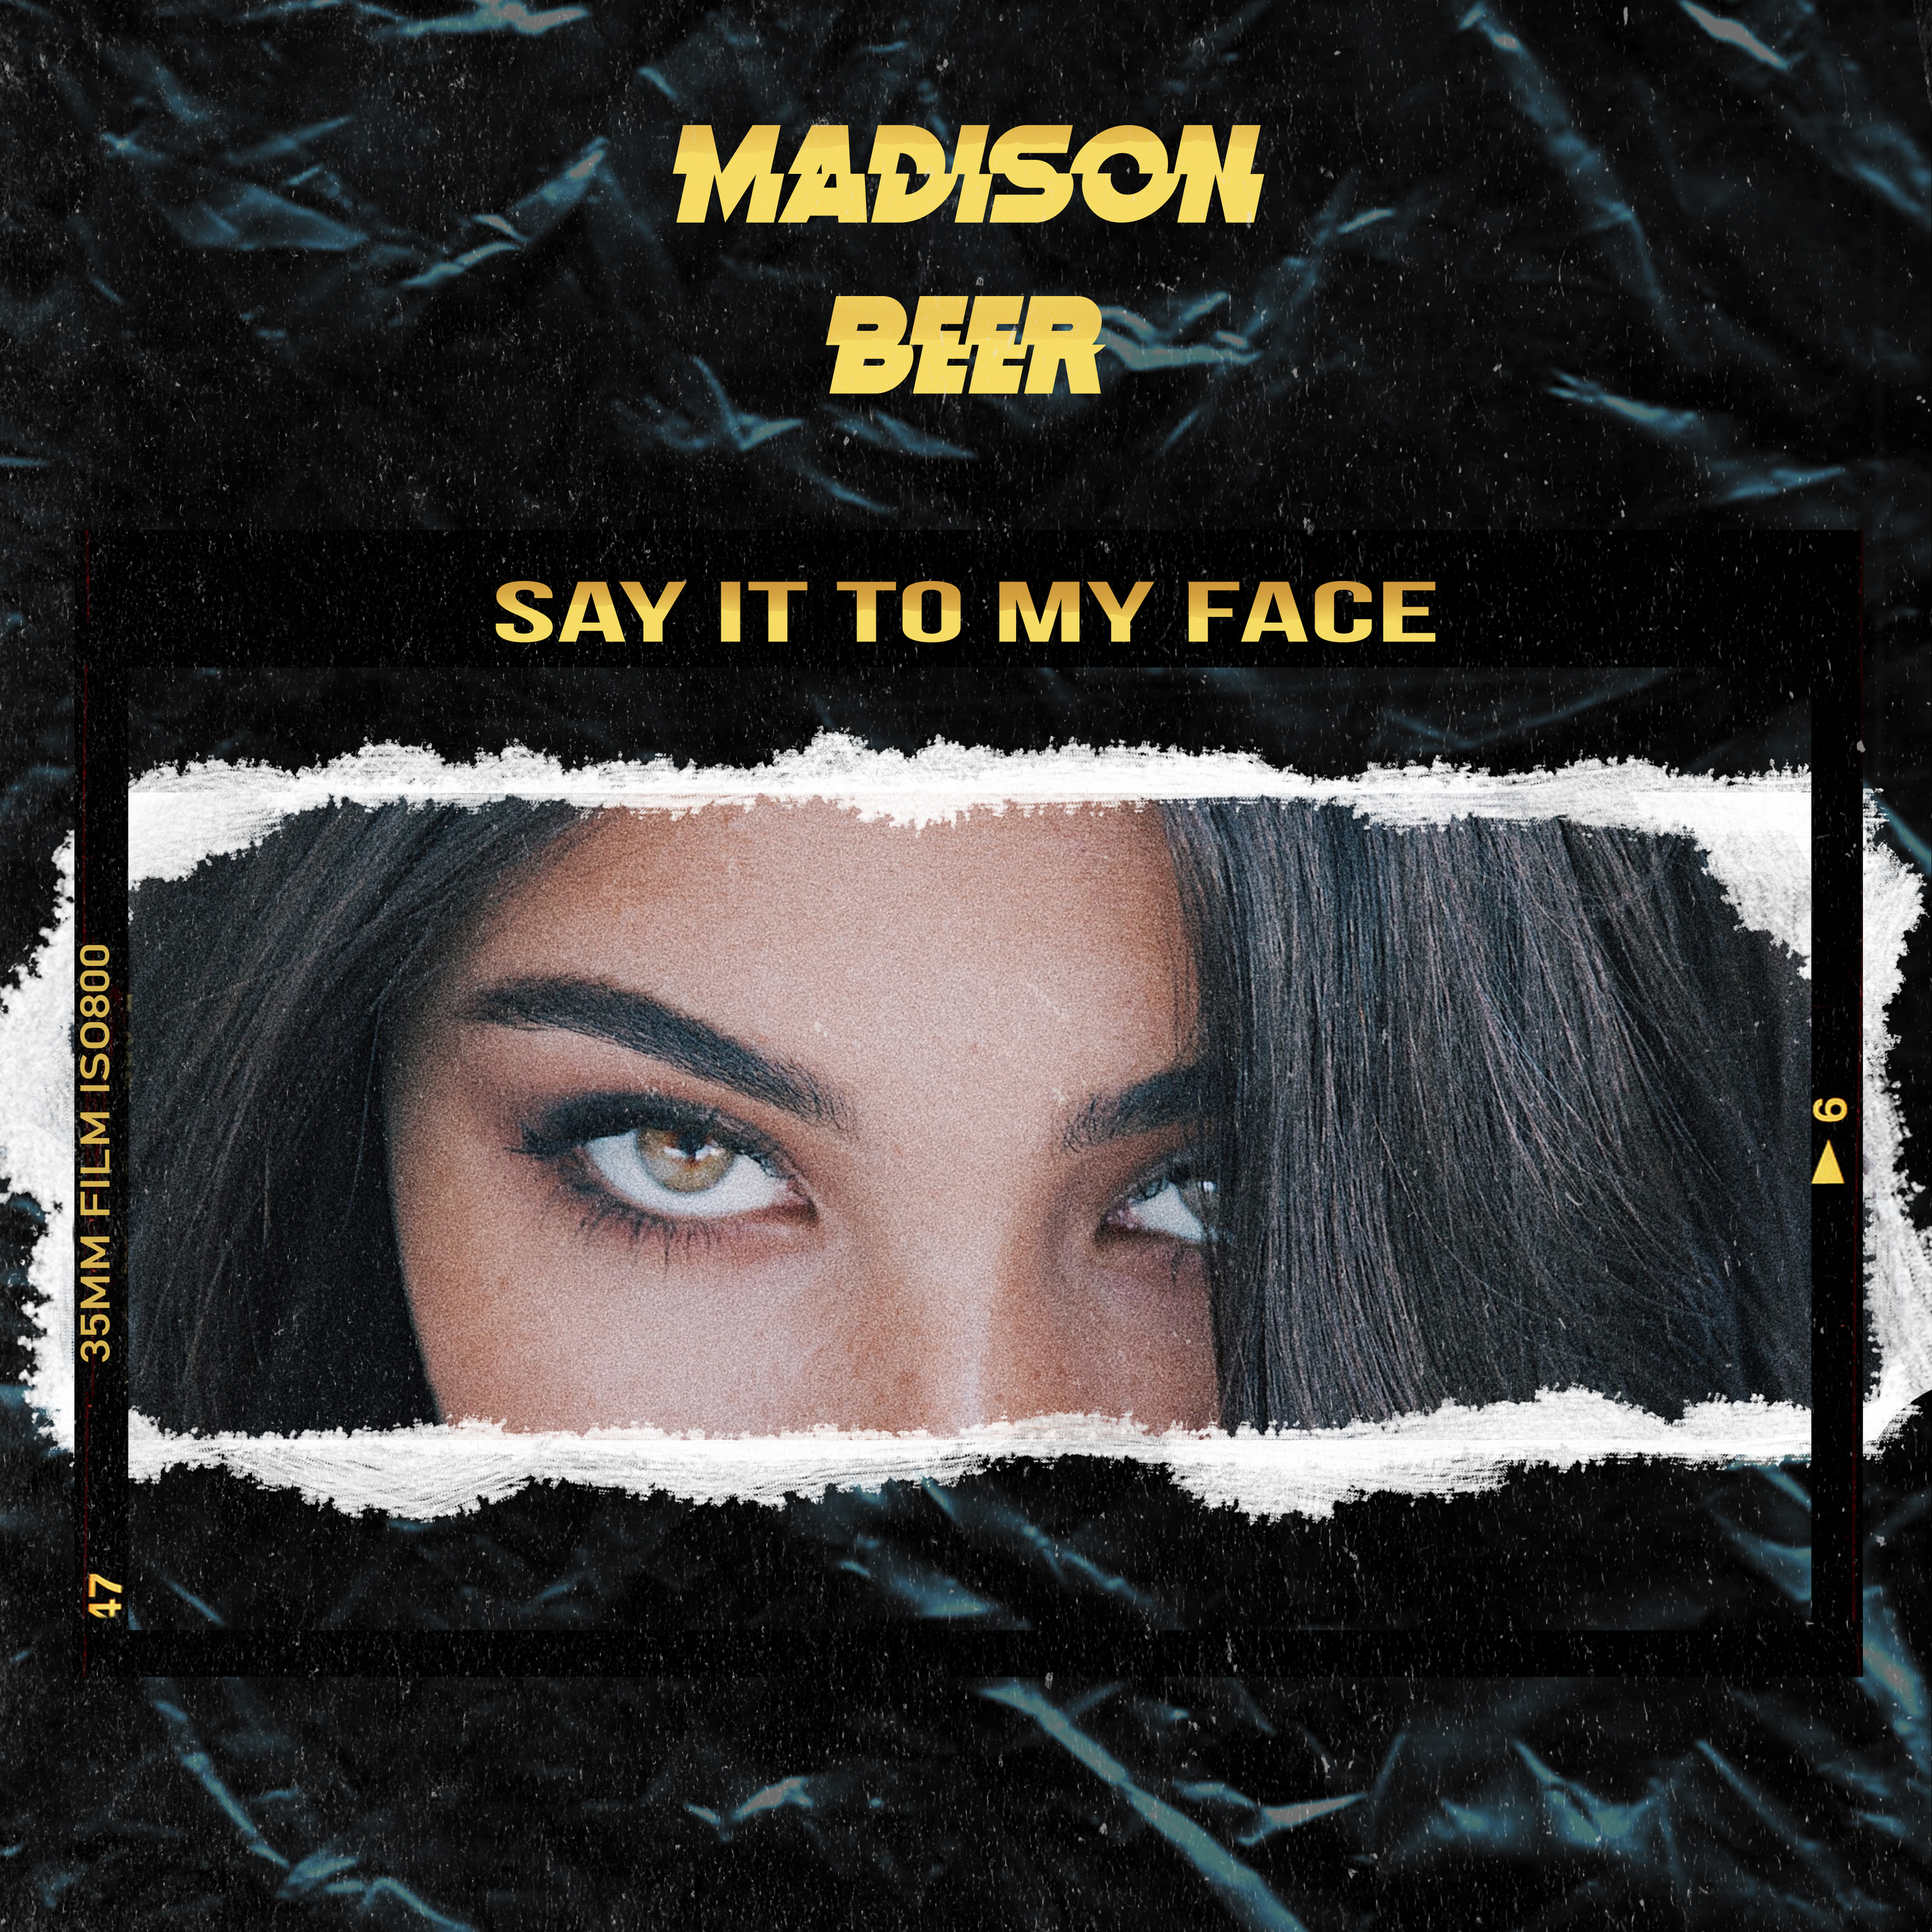 Madison beer песни. Madison Beer обложка. Life support Madison Beer album обложка. Madison Beer - Baby (syn Cole Remix).